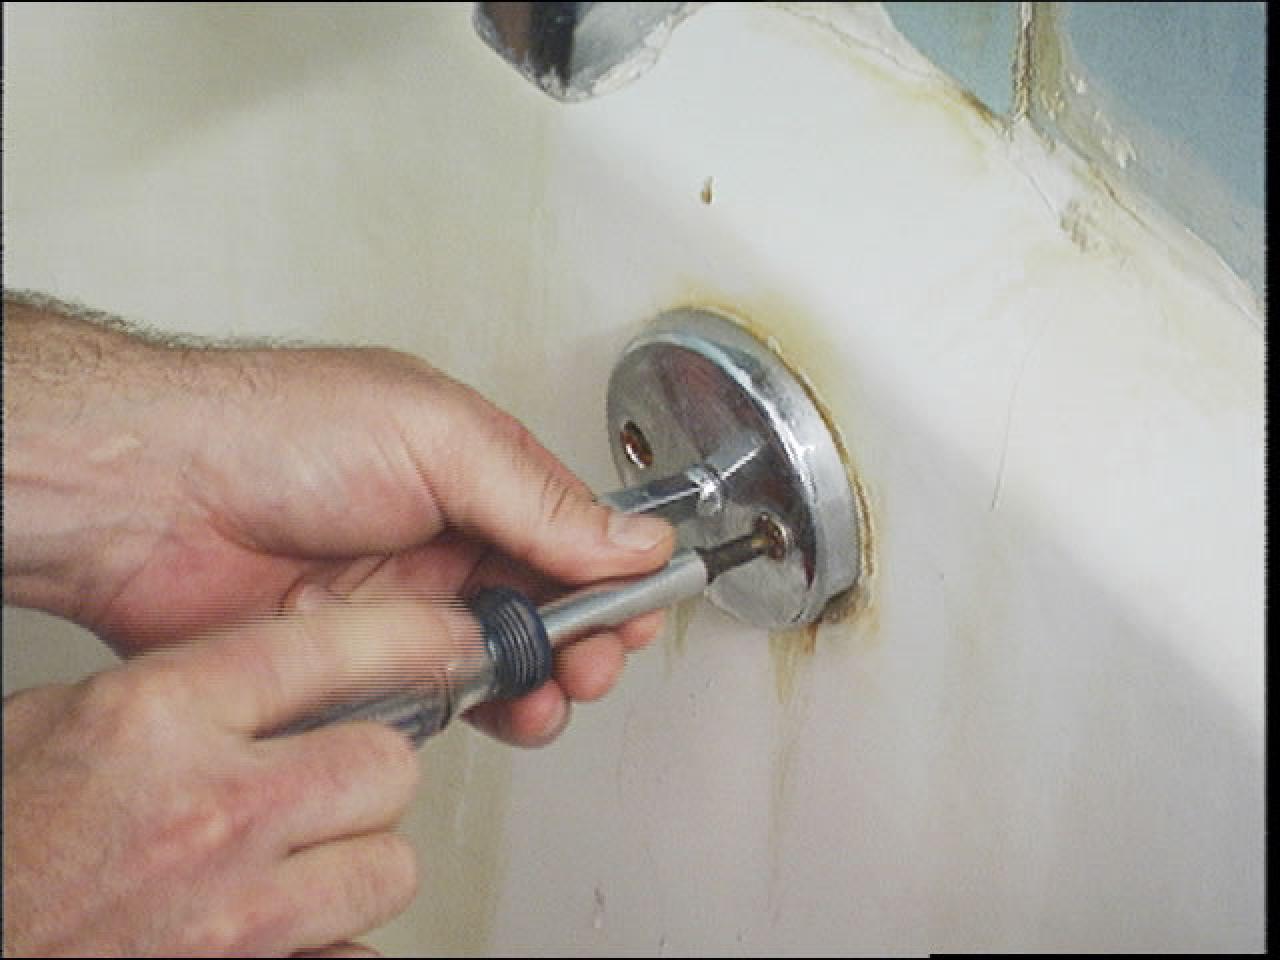 Unclog A Bathtub Using The Trip Lever, How To Fix Bathtub Push Drain Stopper